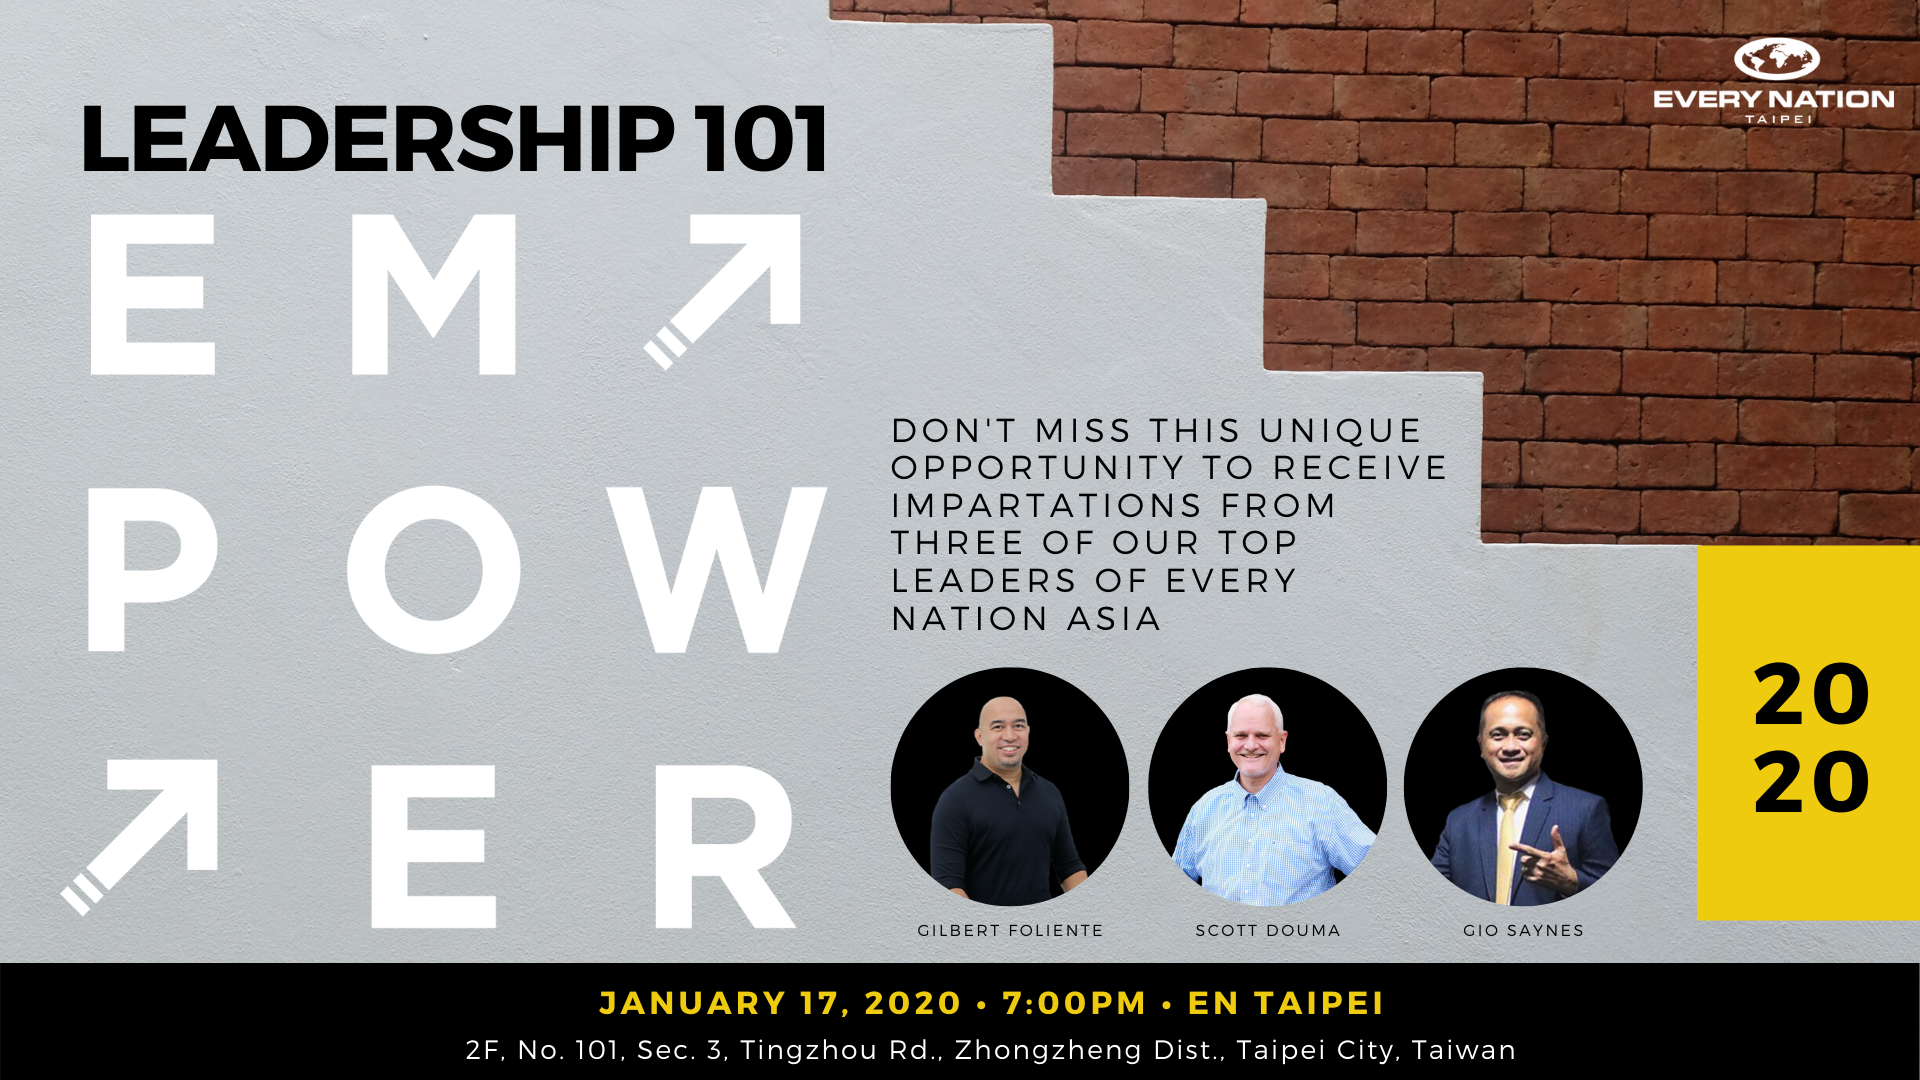 Leadership 101: Empower 101